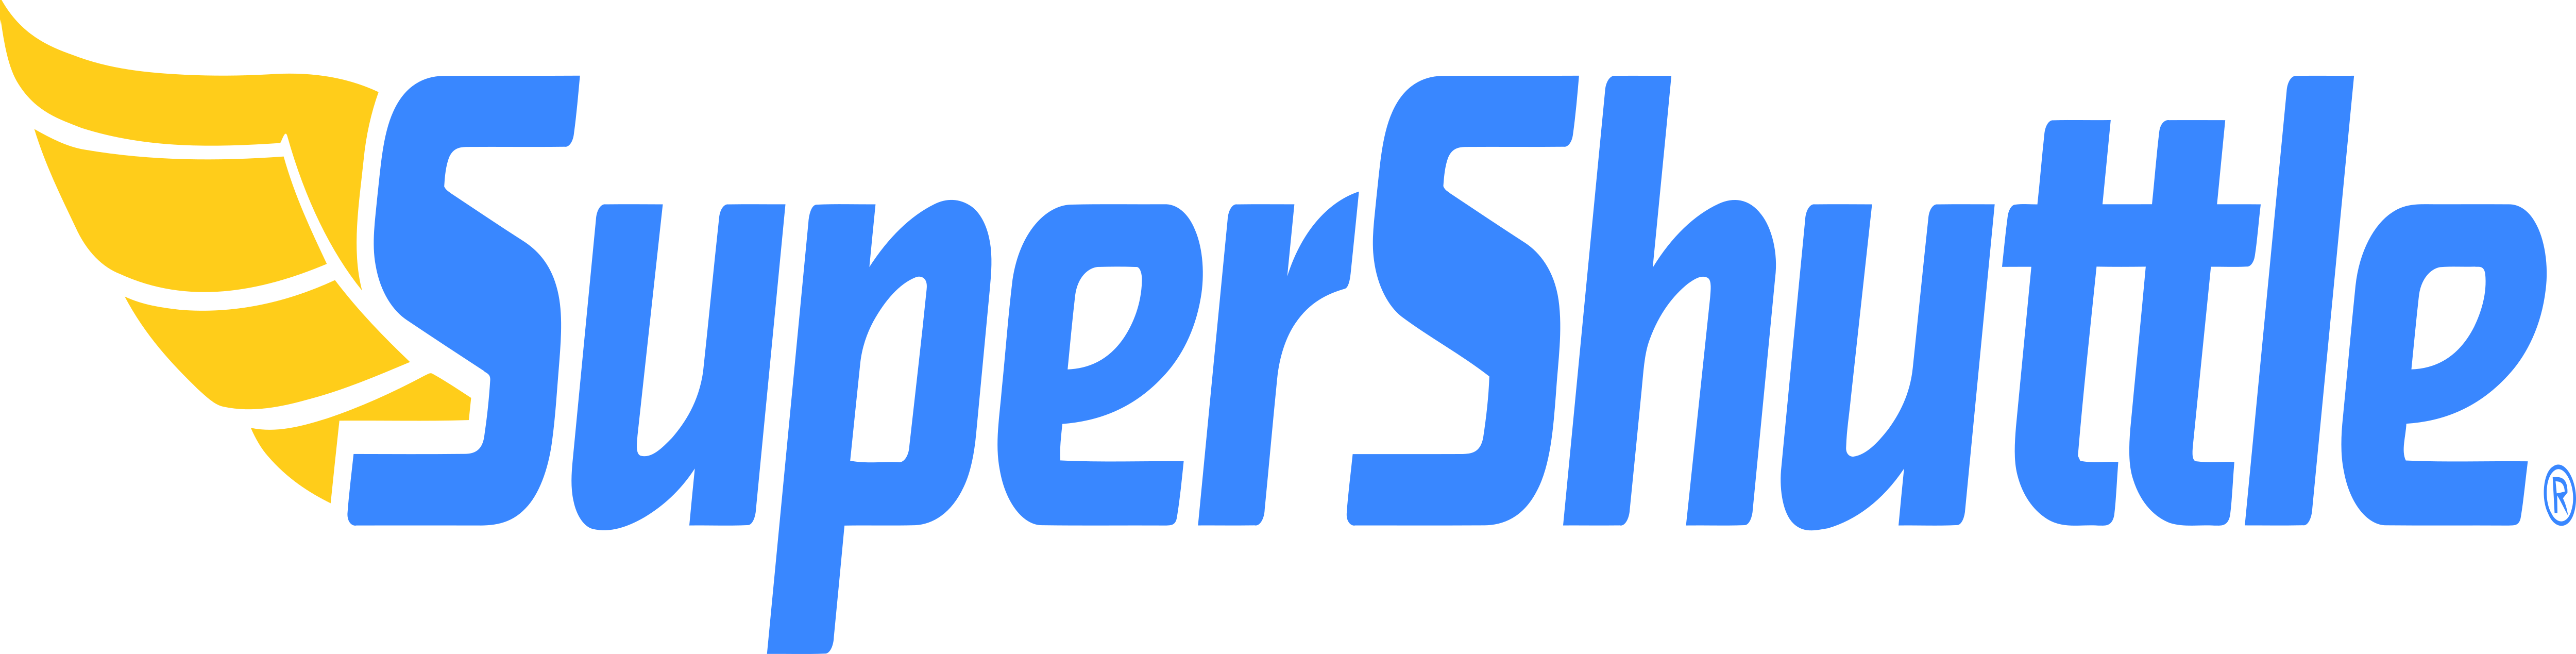 SuperShuttle Logo - Super Shuttle